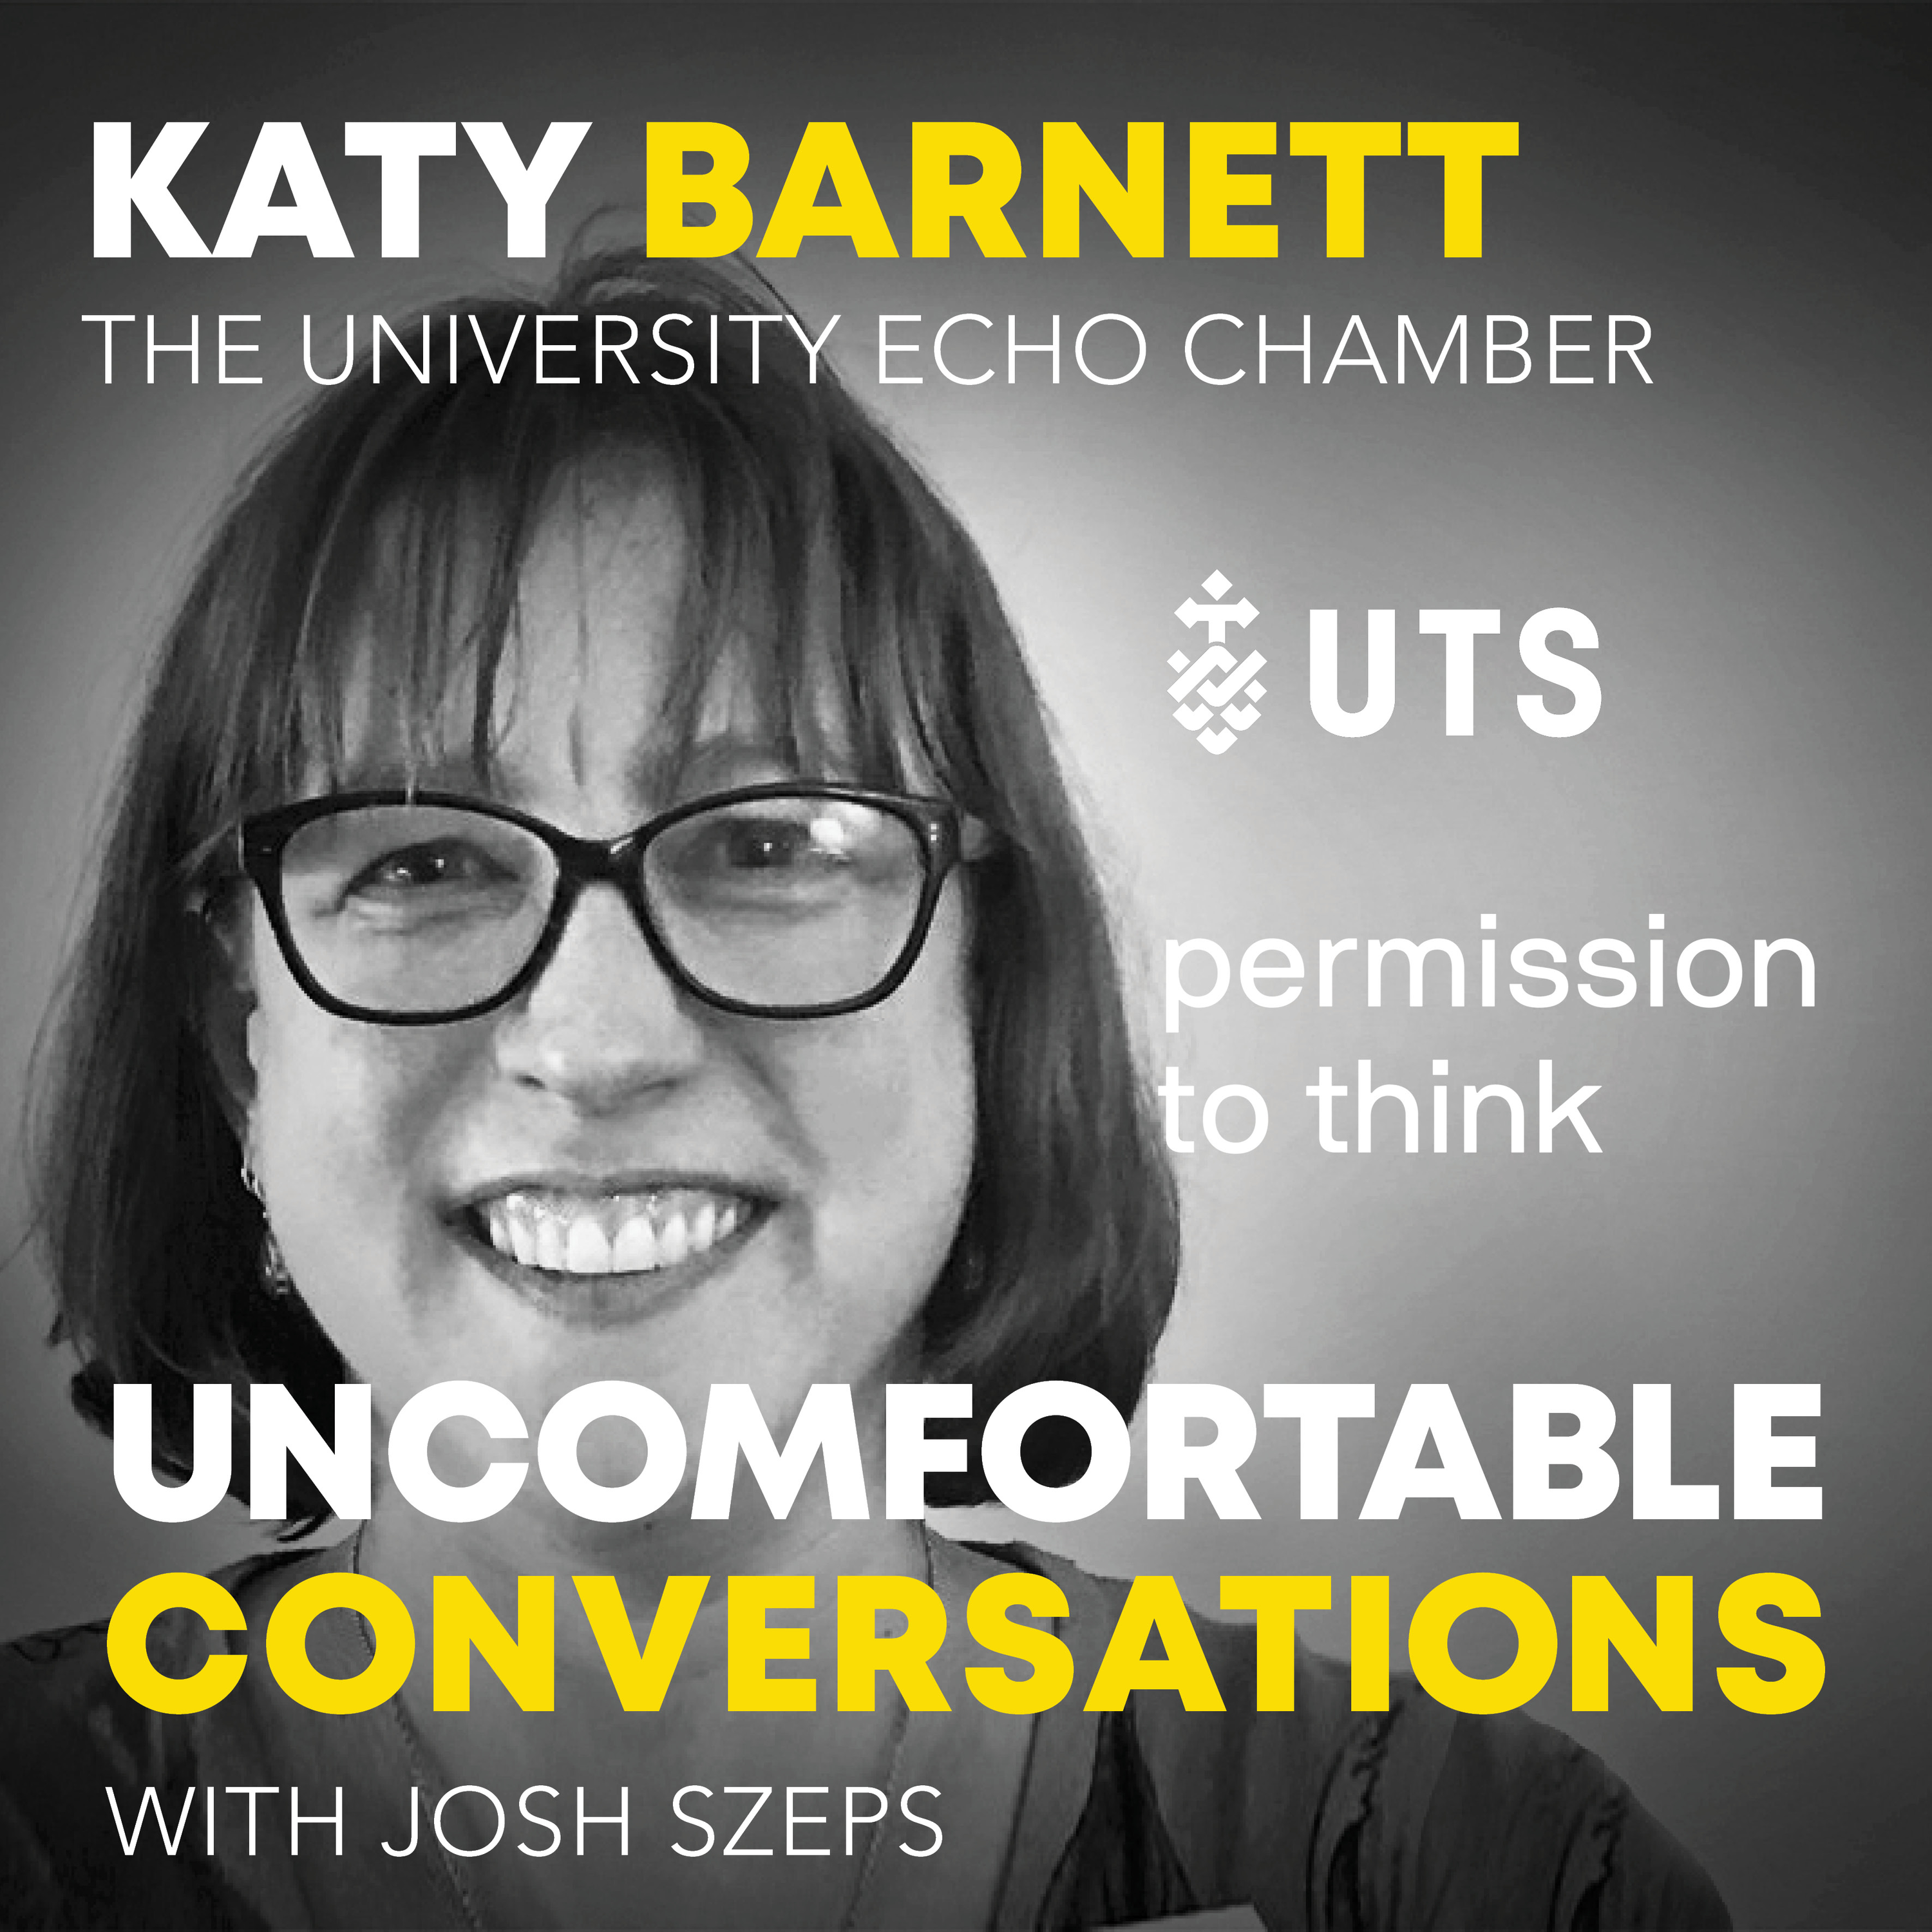 "The University Echo Chamber" with Katy Barnett